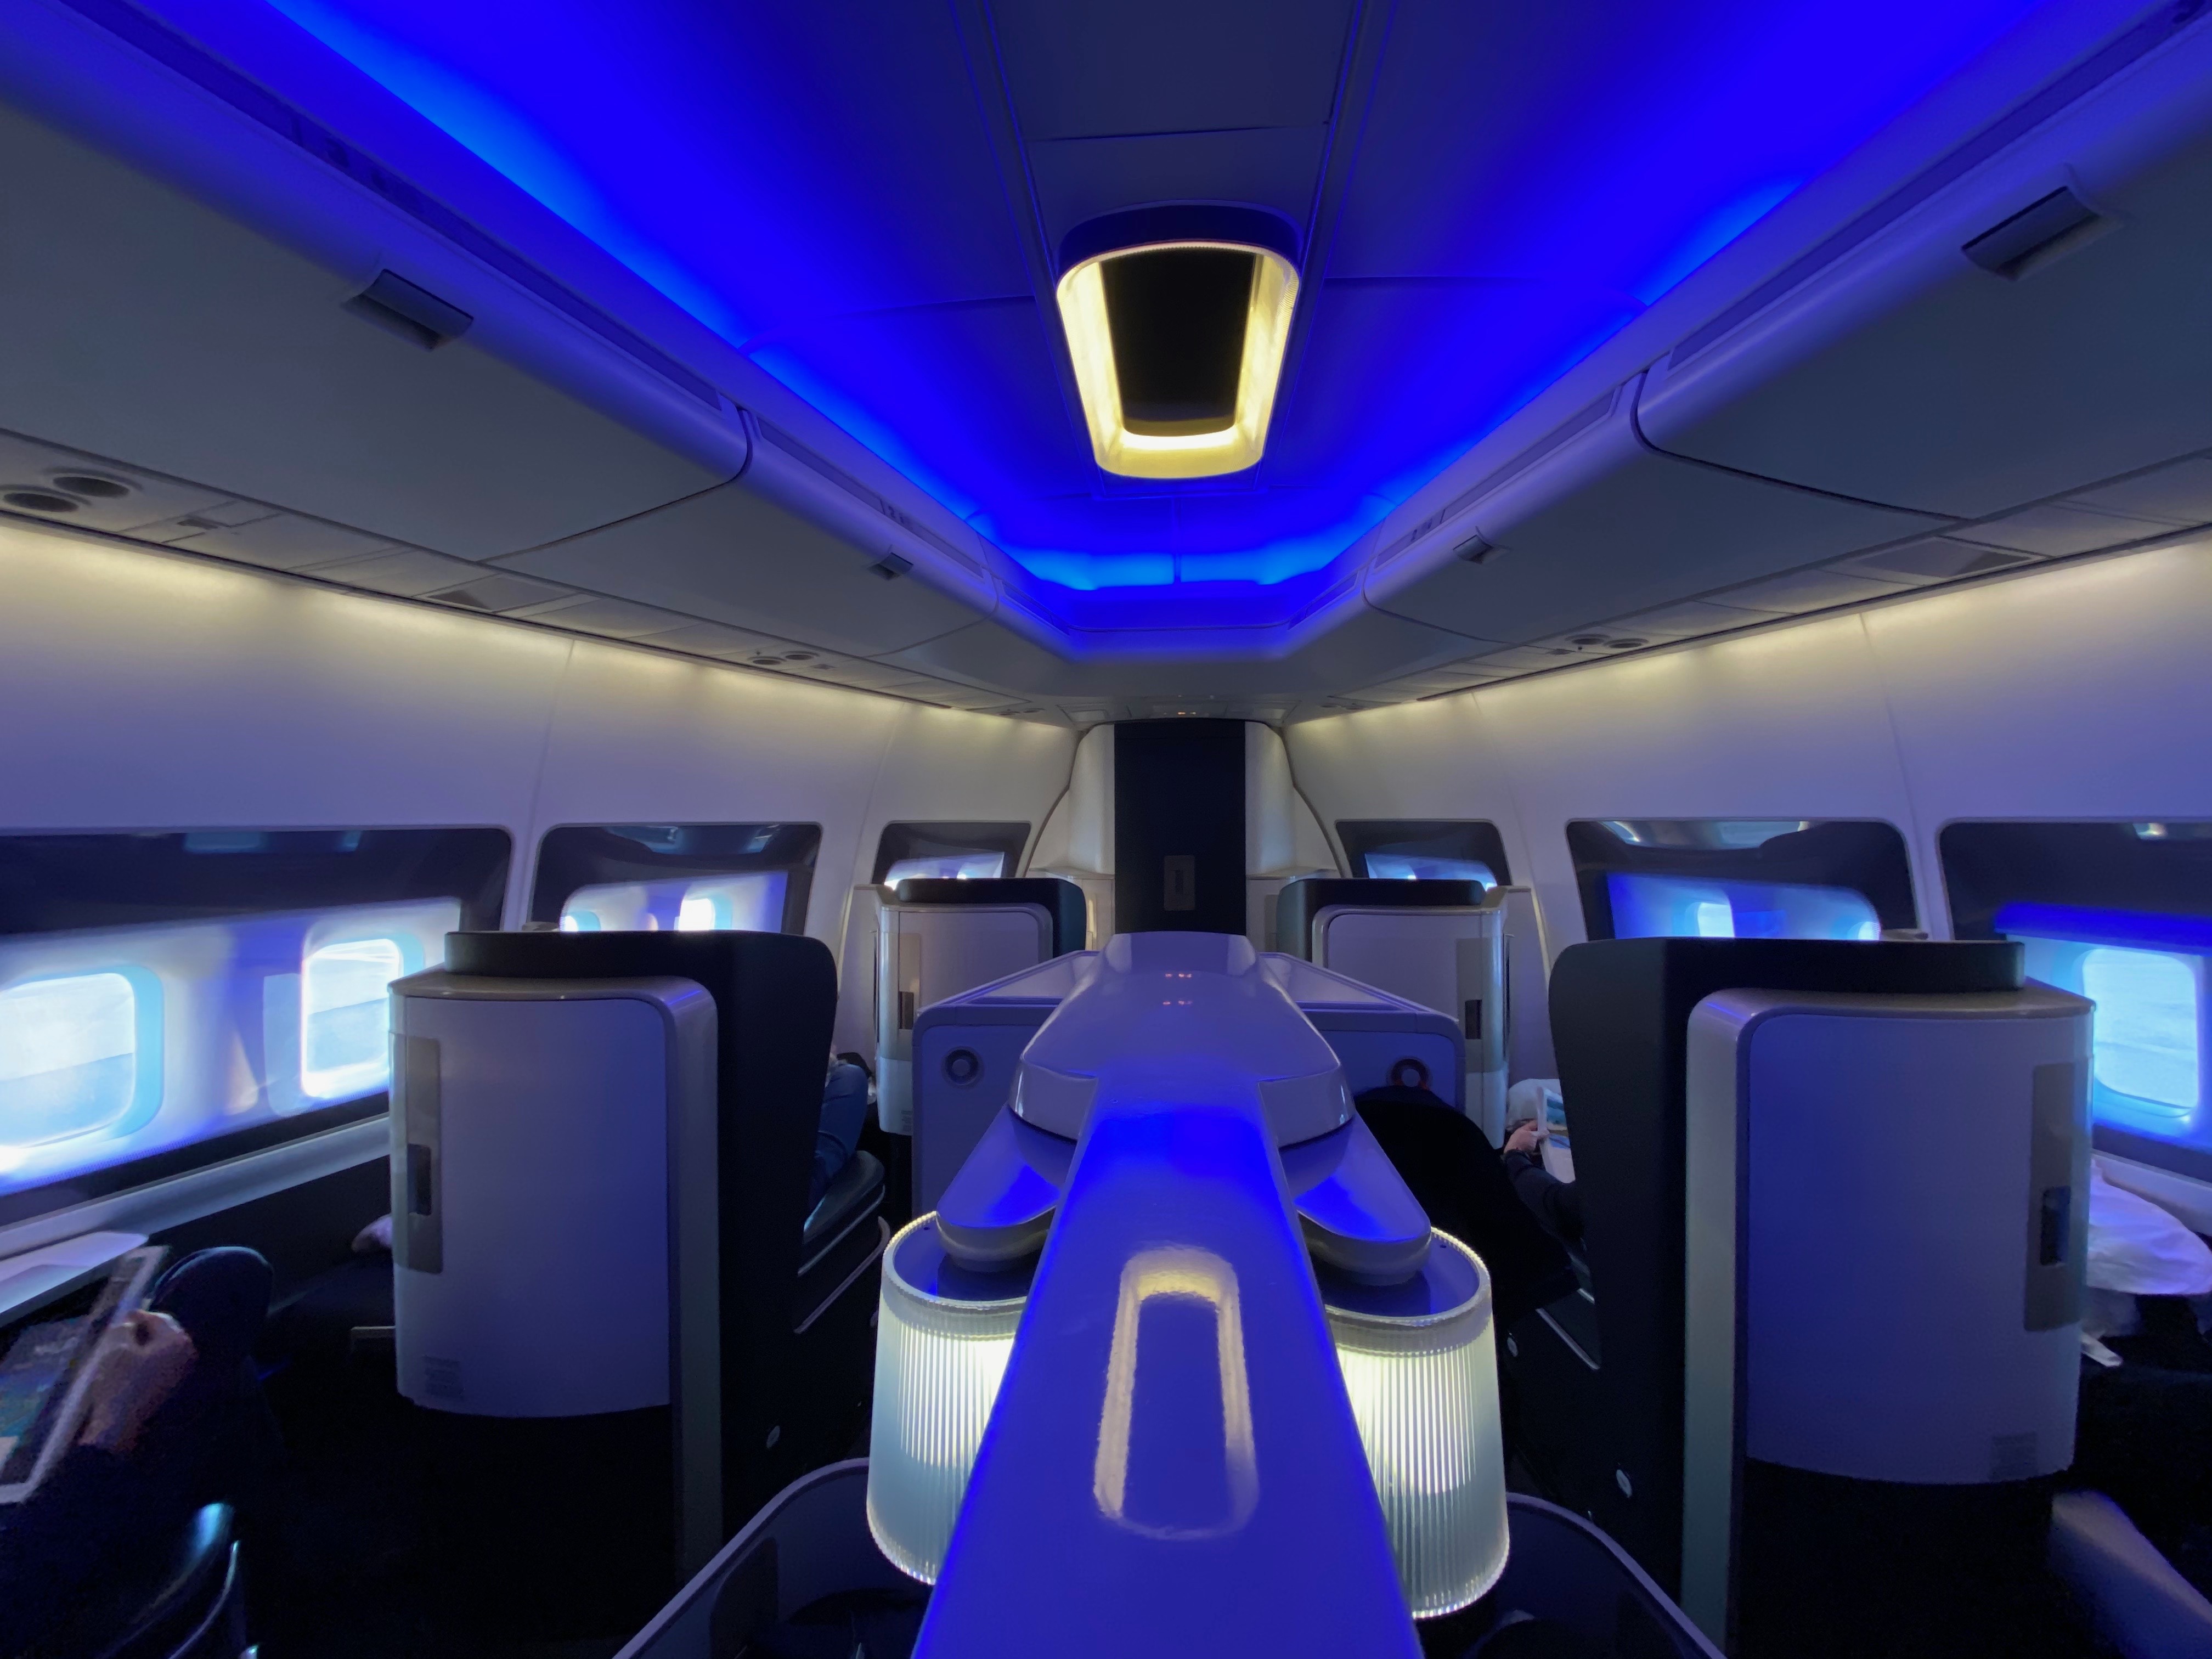 inside a plane with blue lights